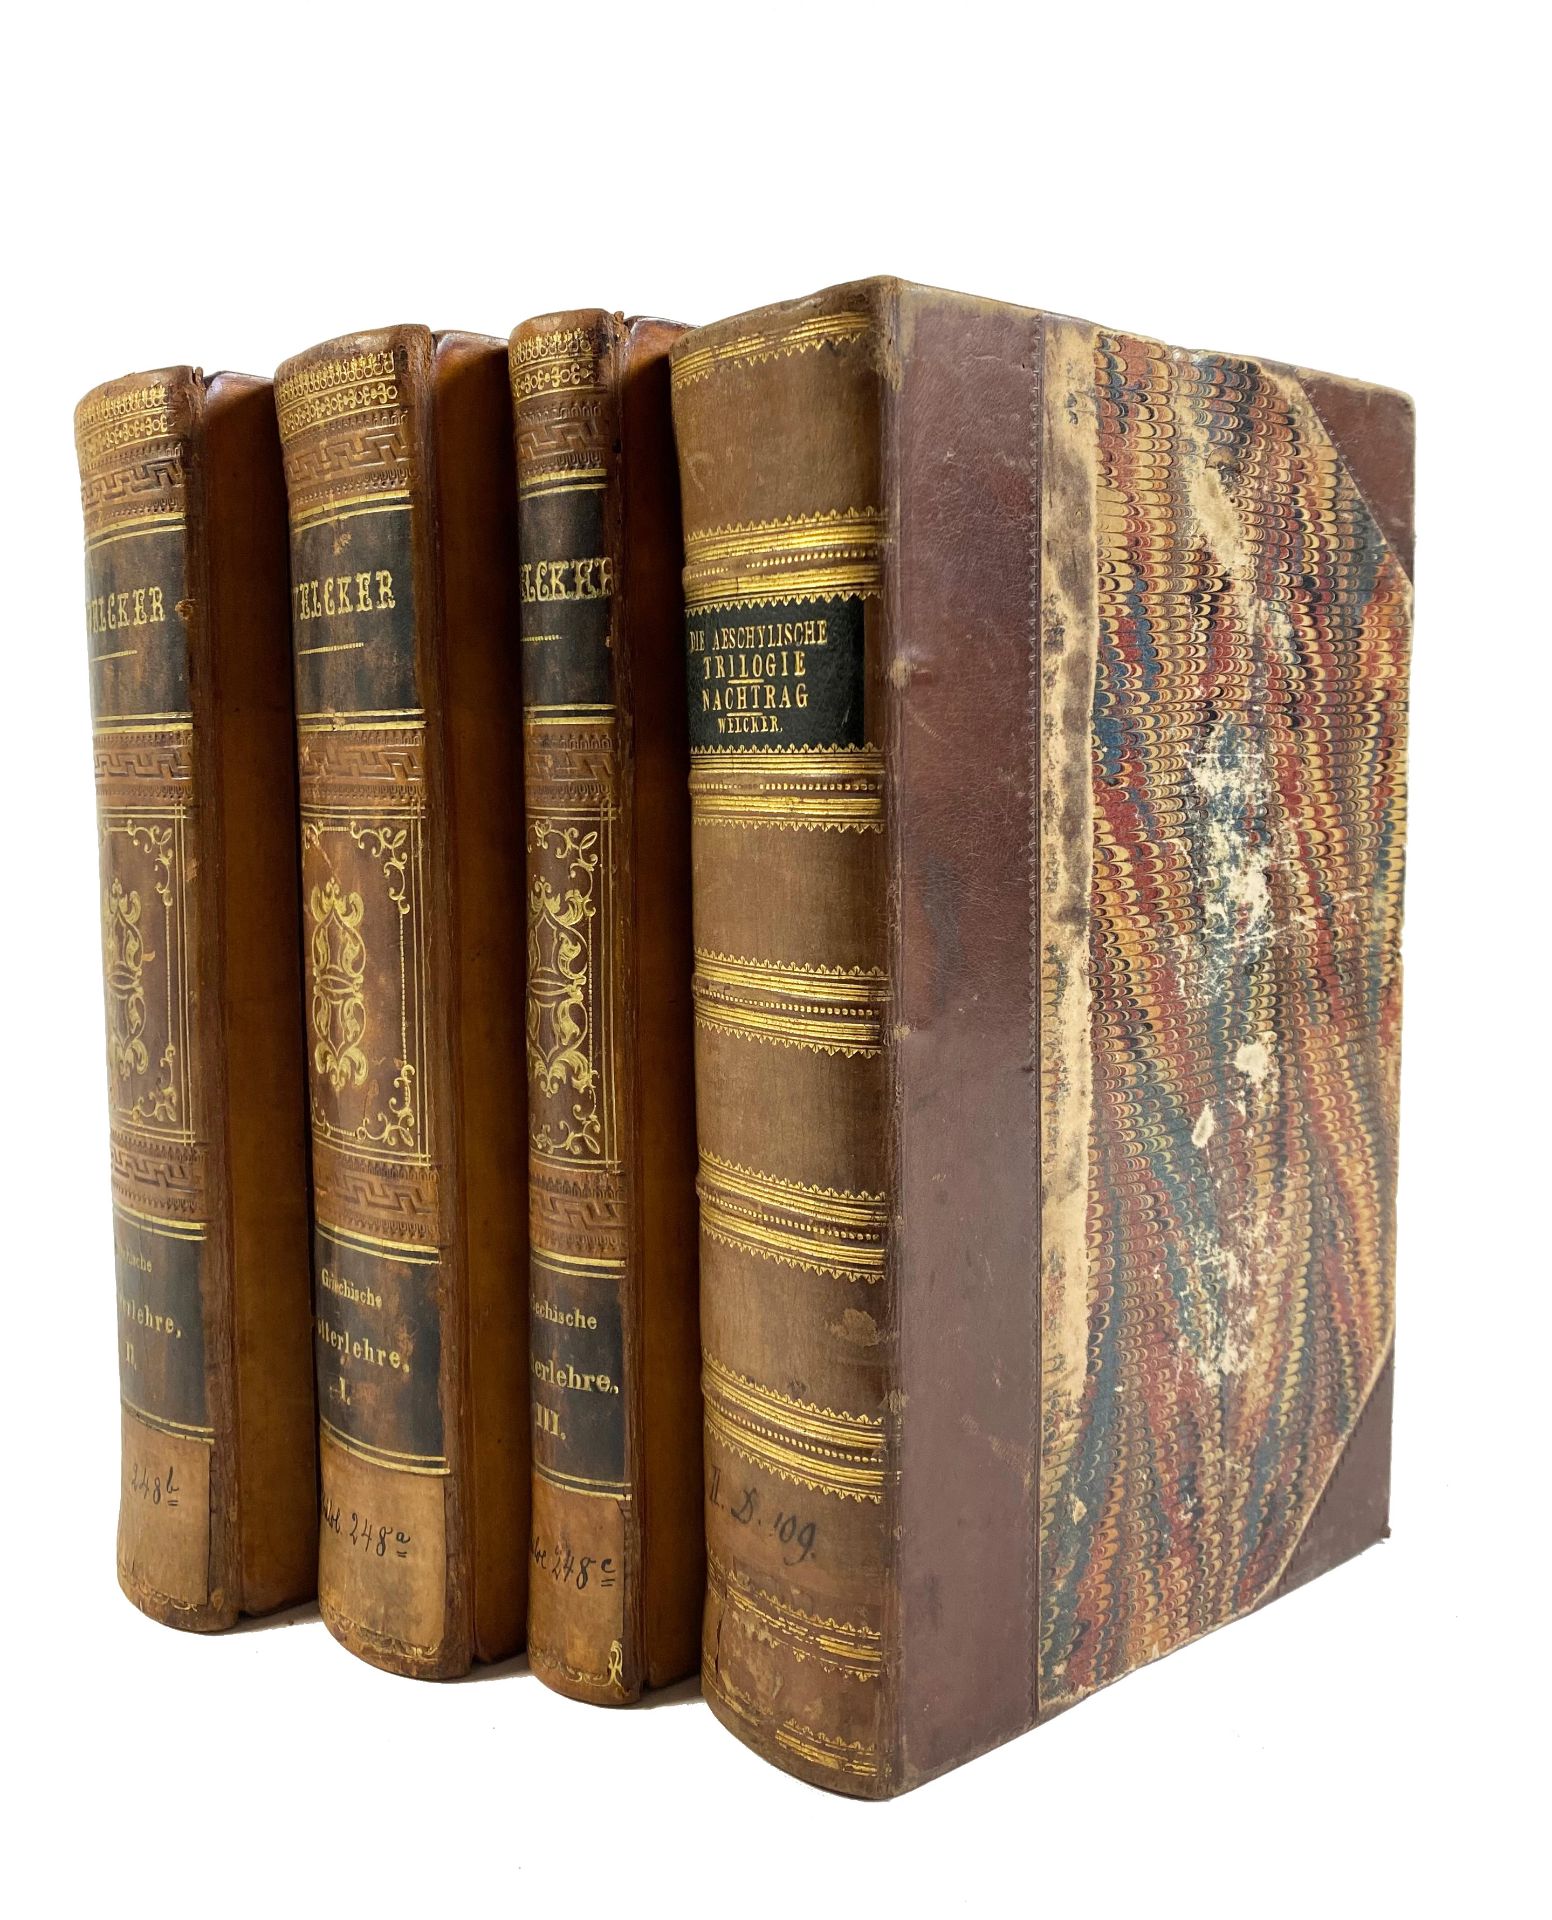 WELCKER, F.G. Griechische Götterlehre. Göttingen, 1857-62. 3 vols. xvi, 822, (2); (4